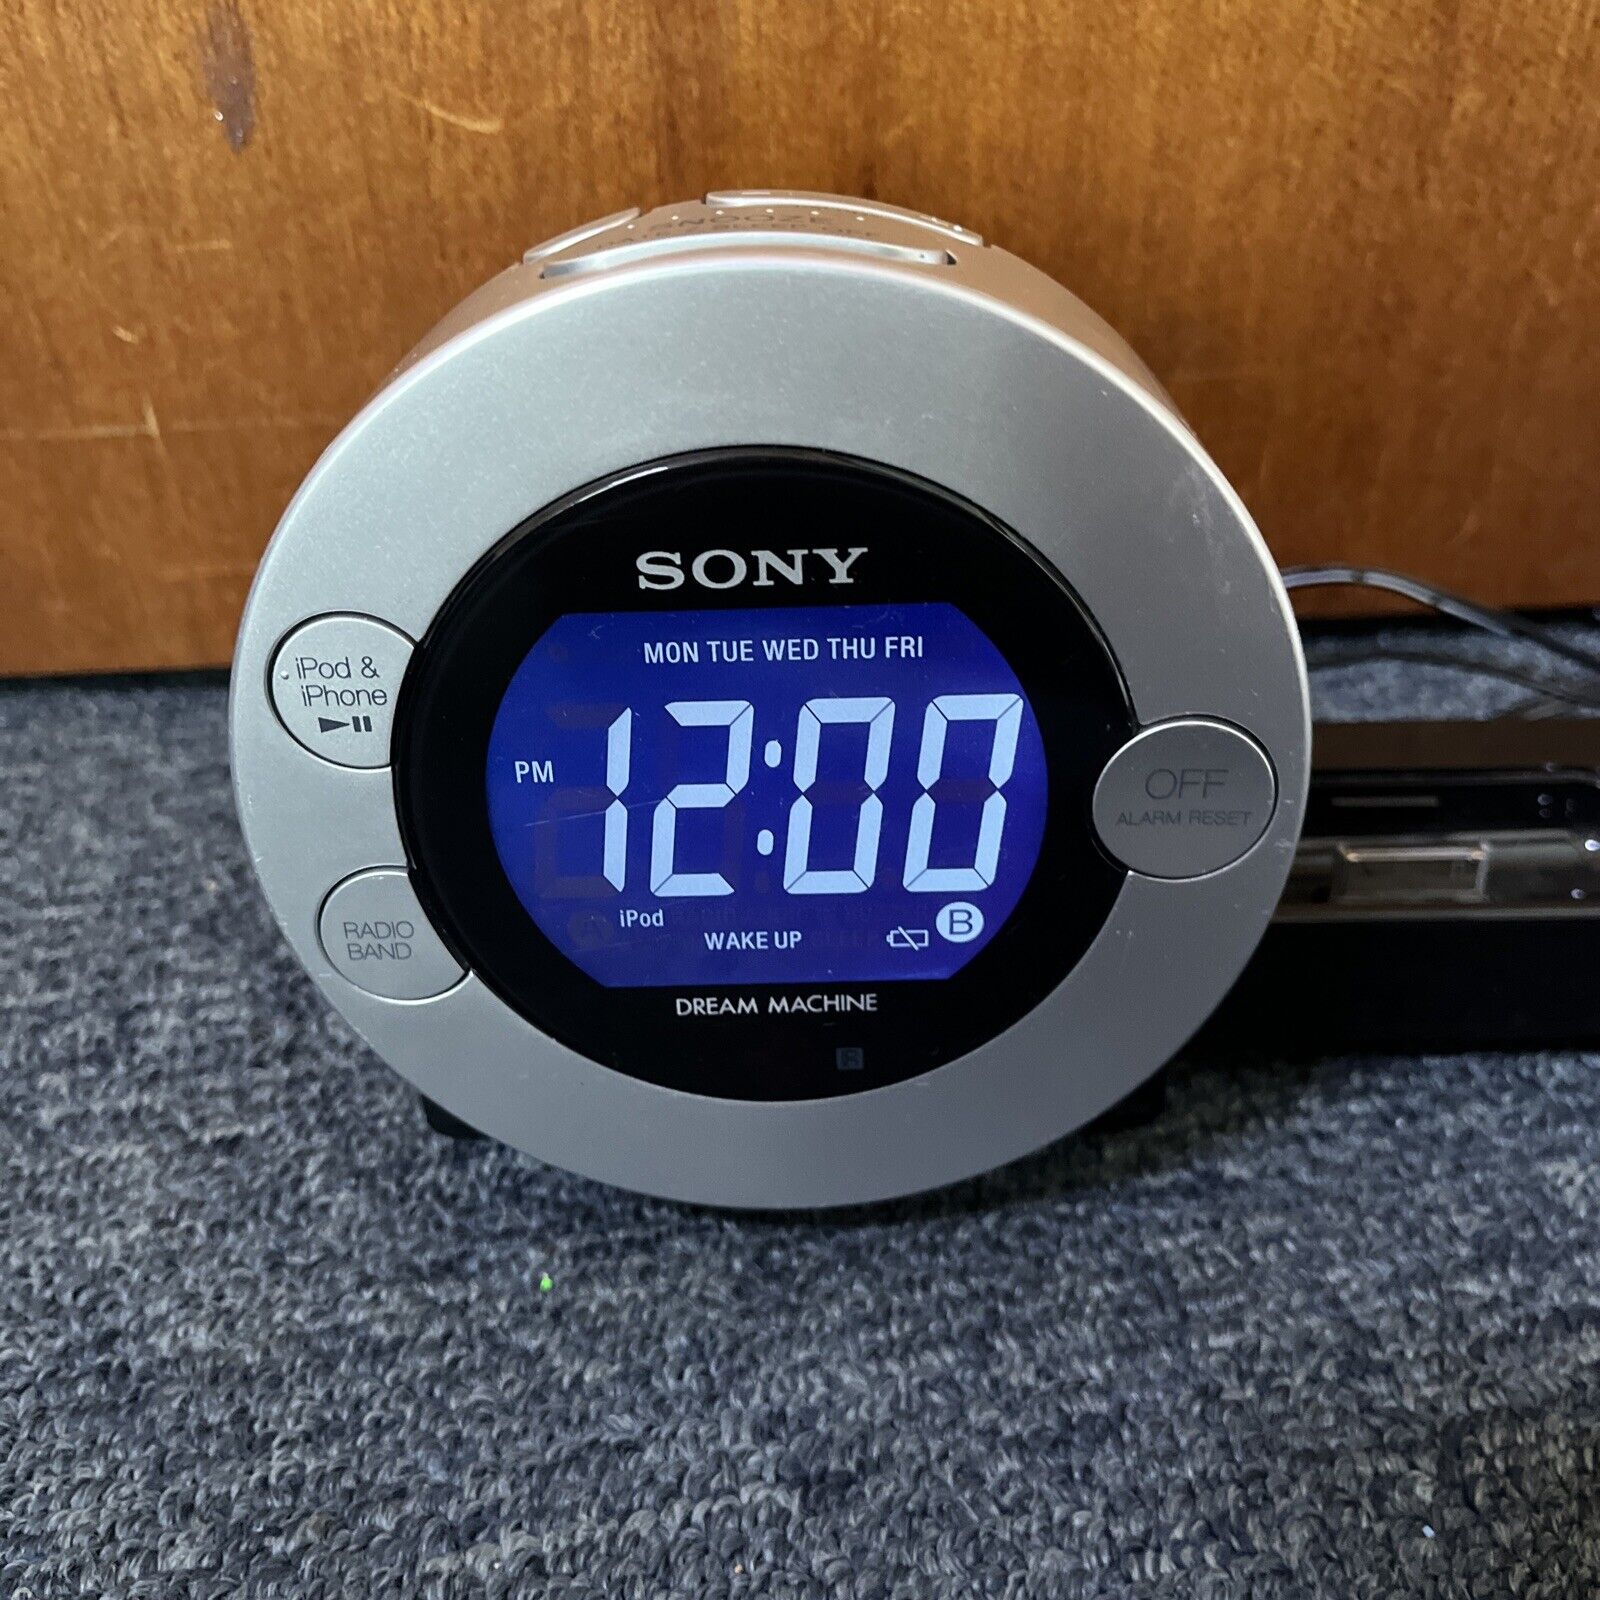 Sony Dream Machine FM/AM 2 bands radio and alarm clock ICF-C730